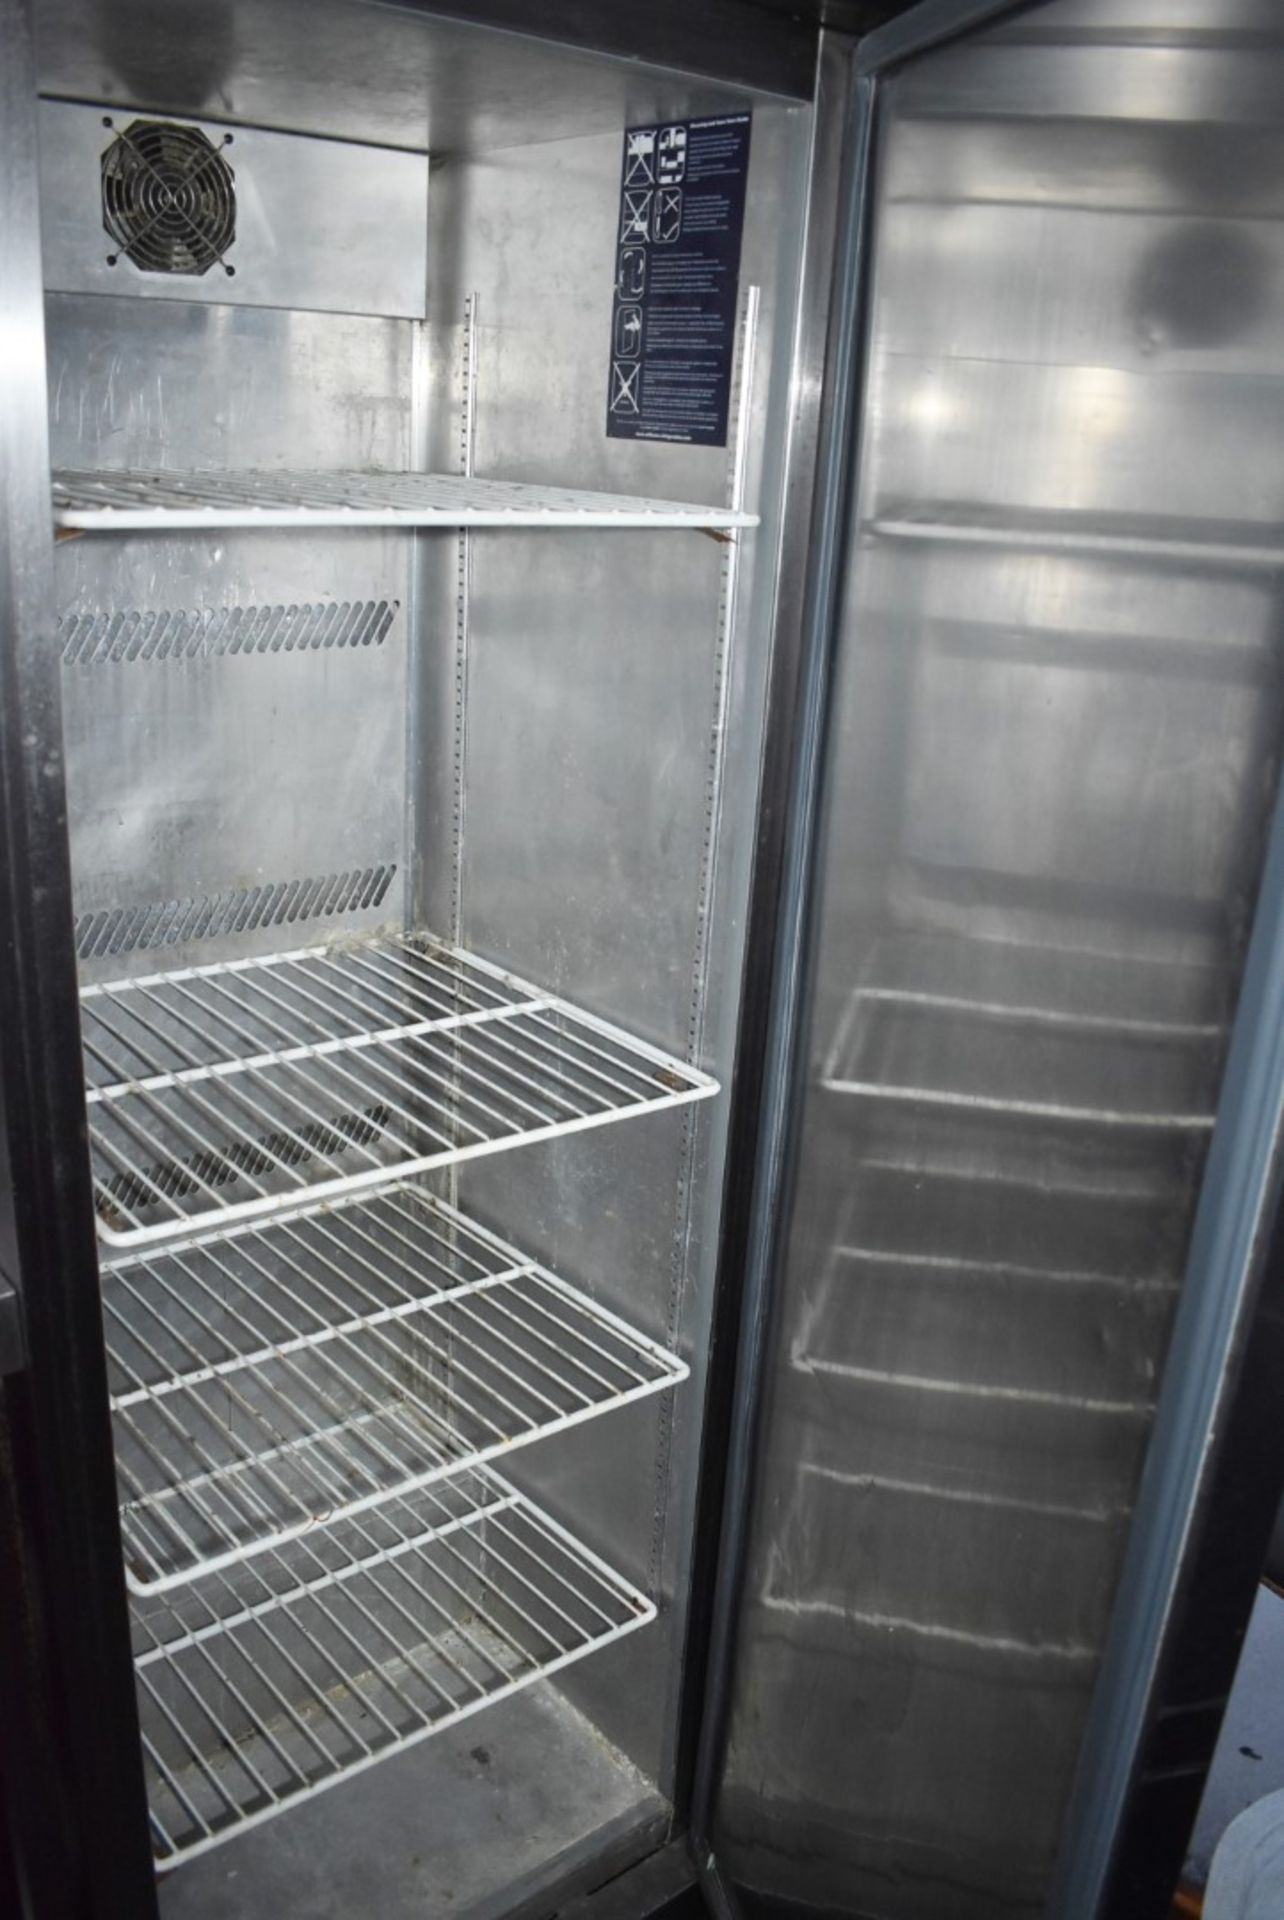 1 x Williams HA400SA Upright Commercial 410 Liter Refrigerator - CL586 - Location: Altrincham WA14 - Image 3 of 4